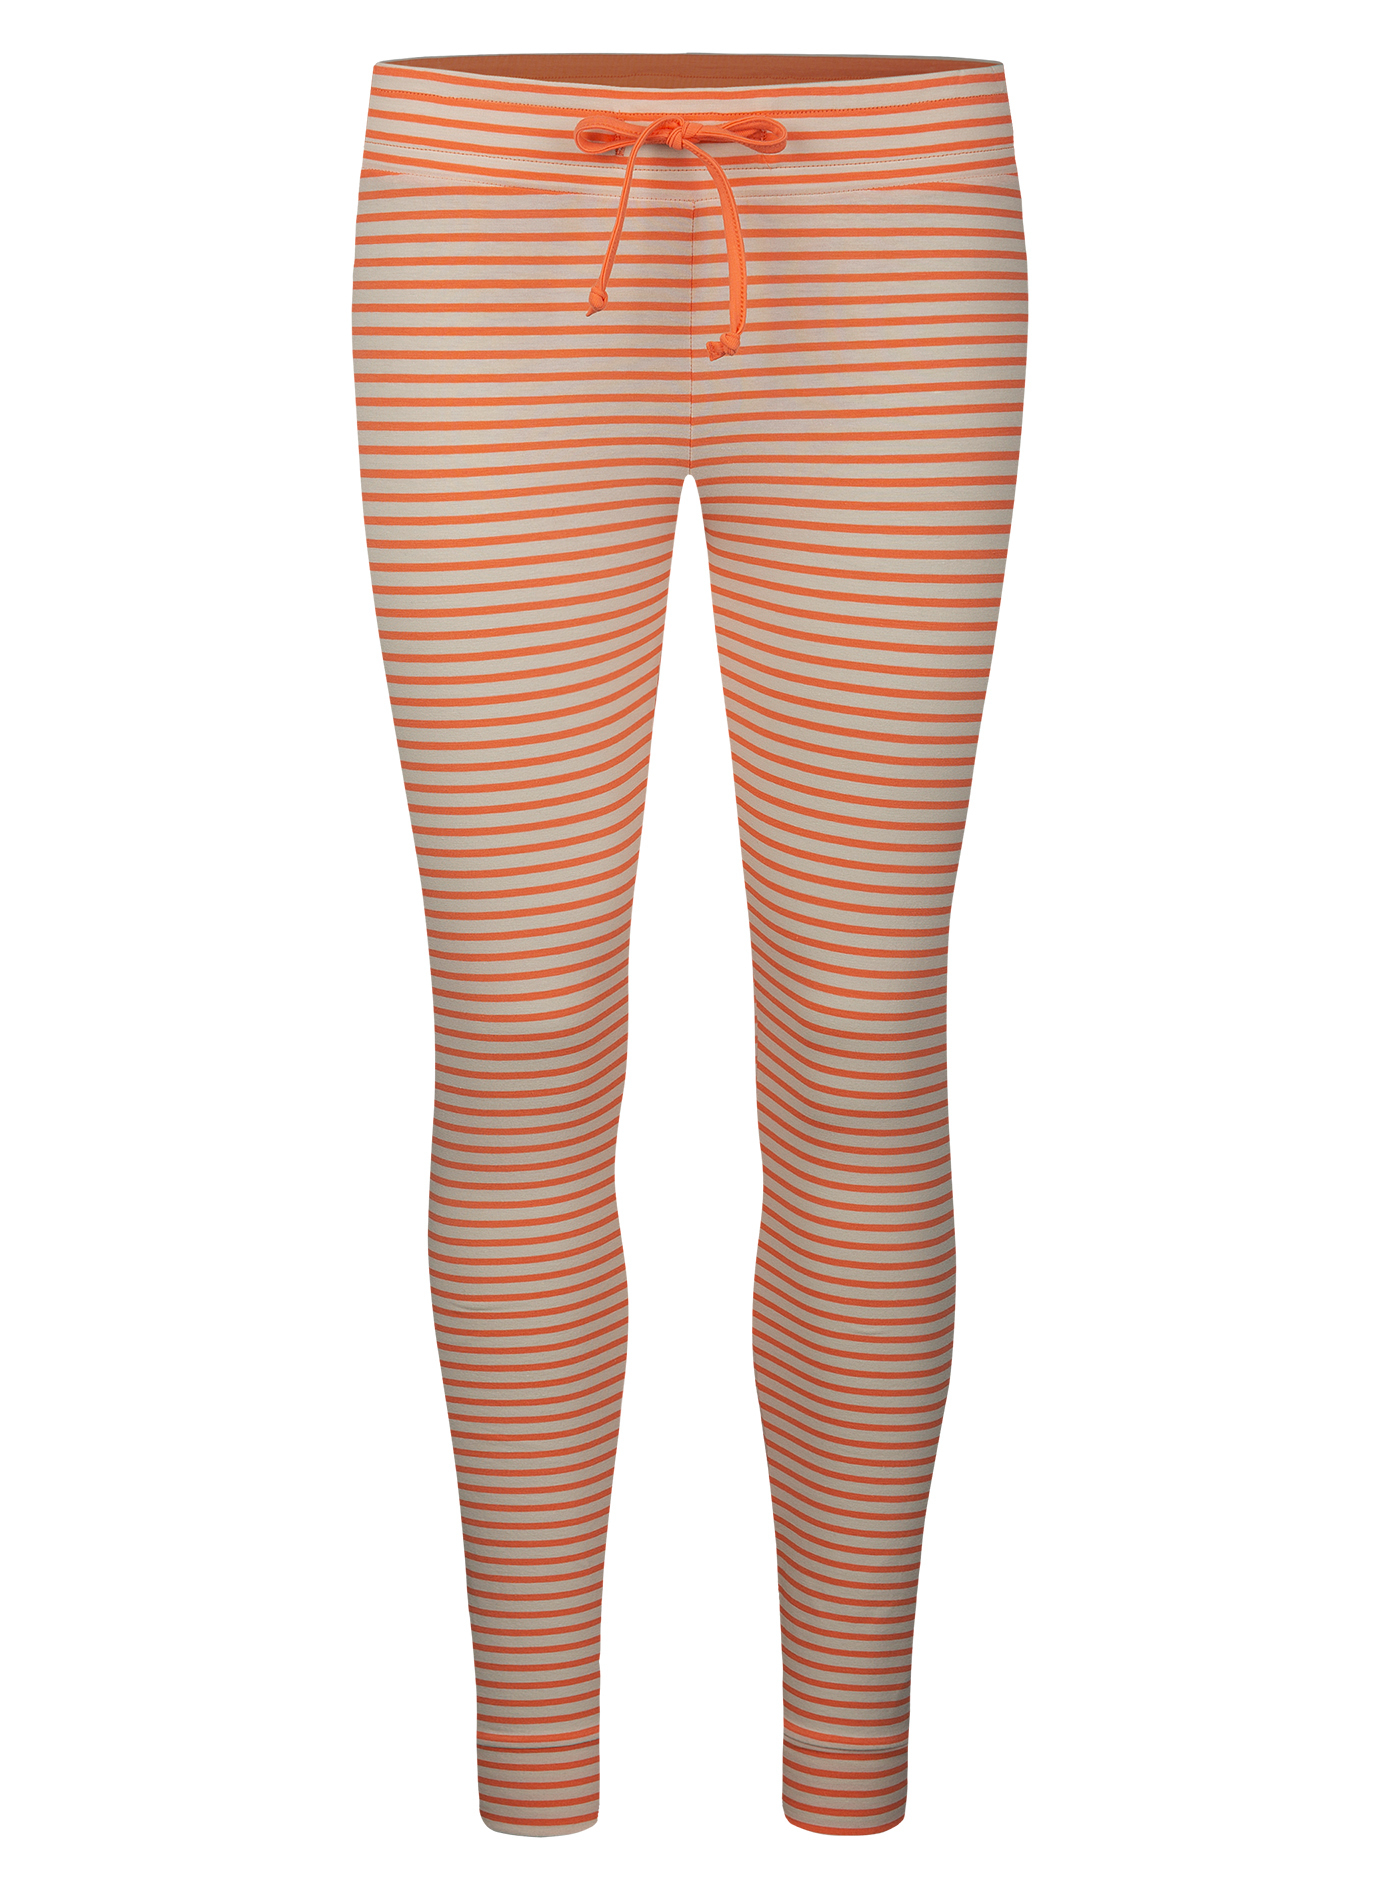 Damen-Leggings Orange Ringel